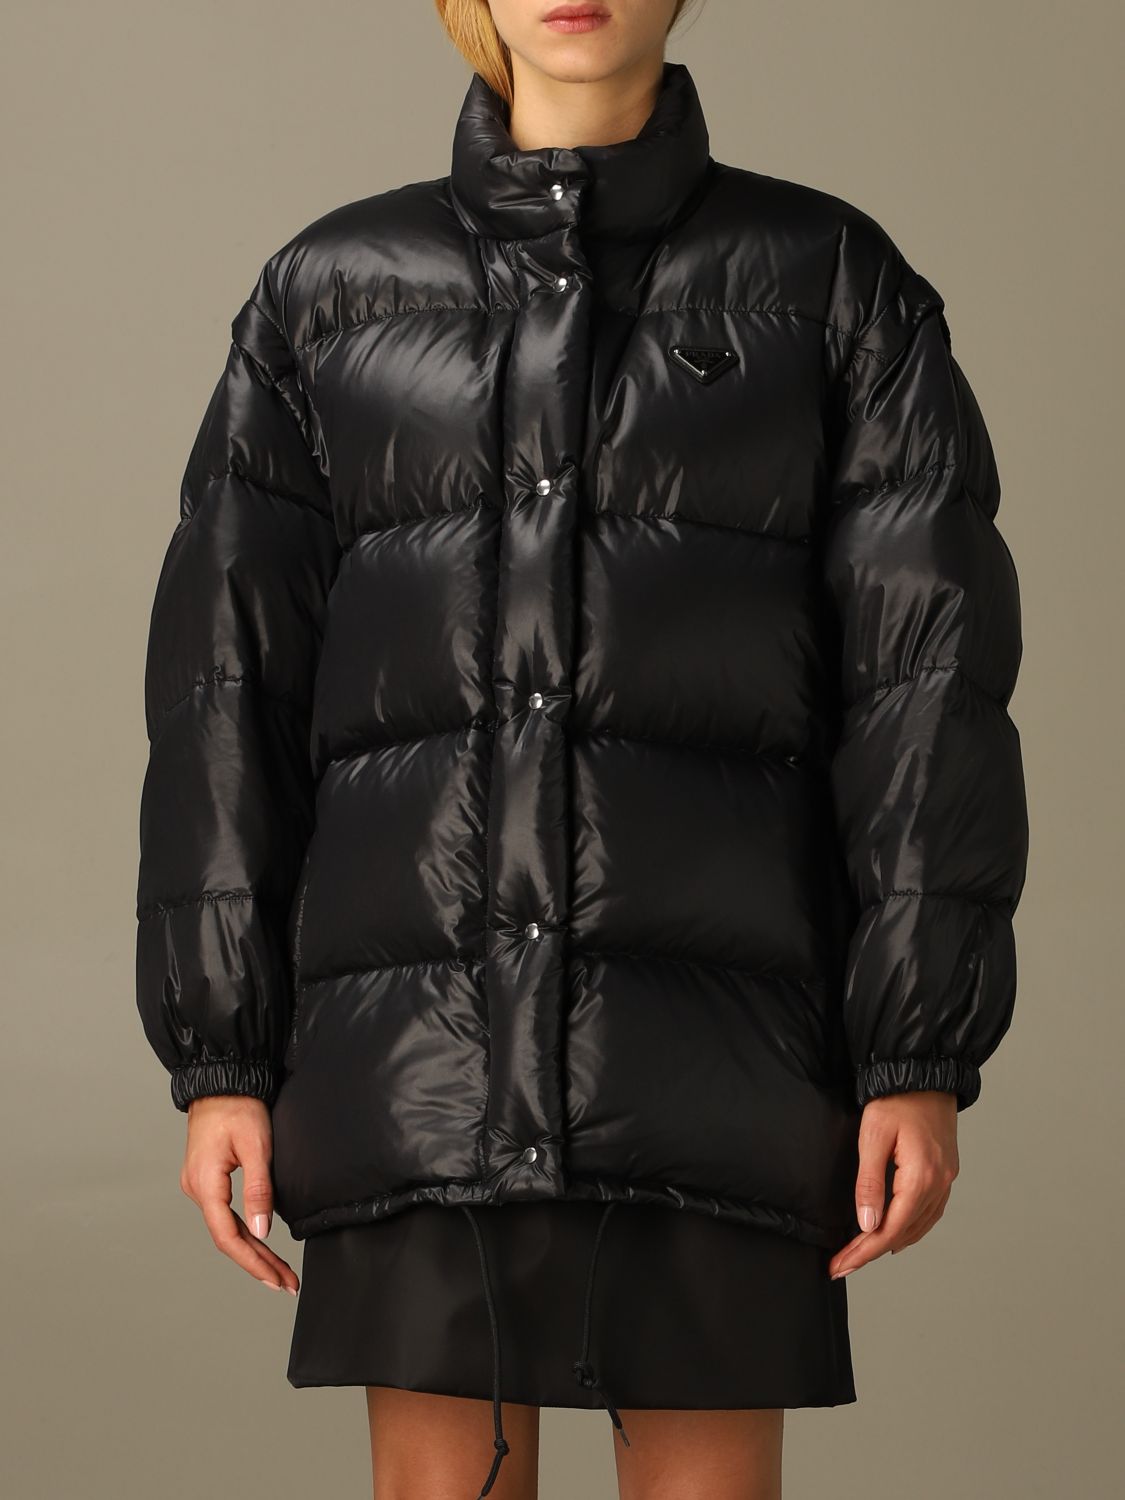 PRADA: medium down jacket in padded nylon - Black | Prada jacket 29X805  1IE0 online on 